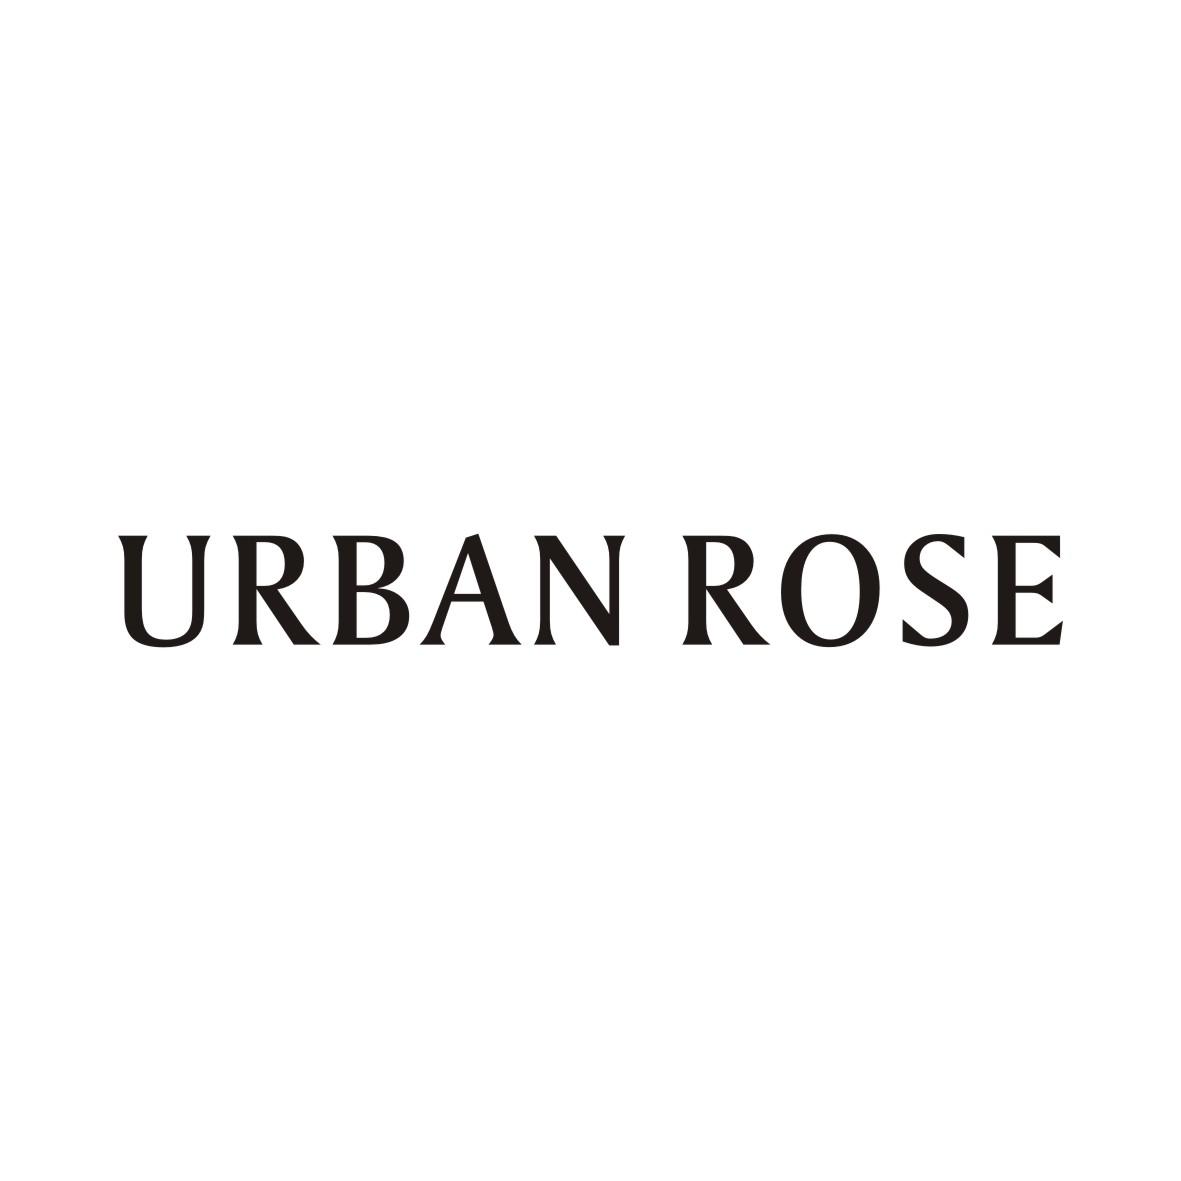 URBAN ROSE商标转让